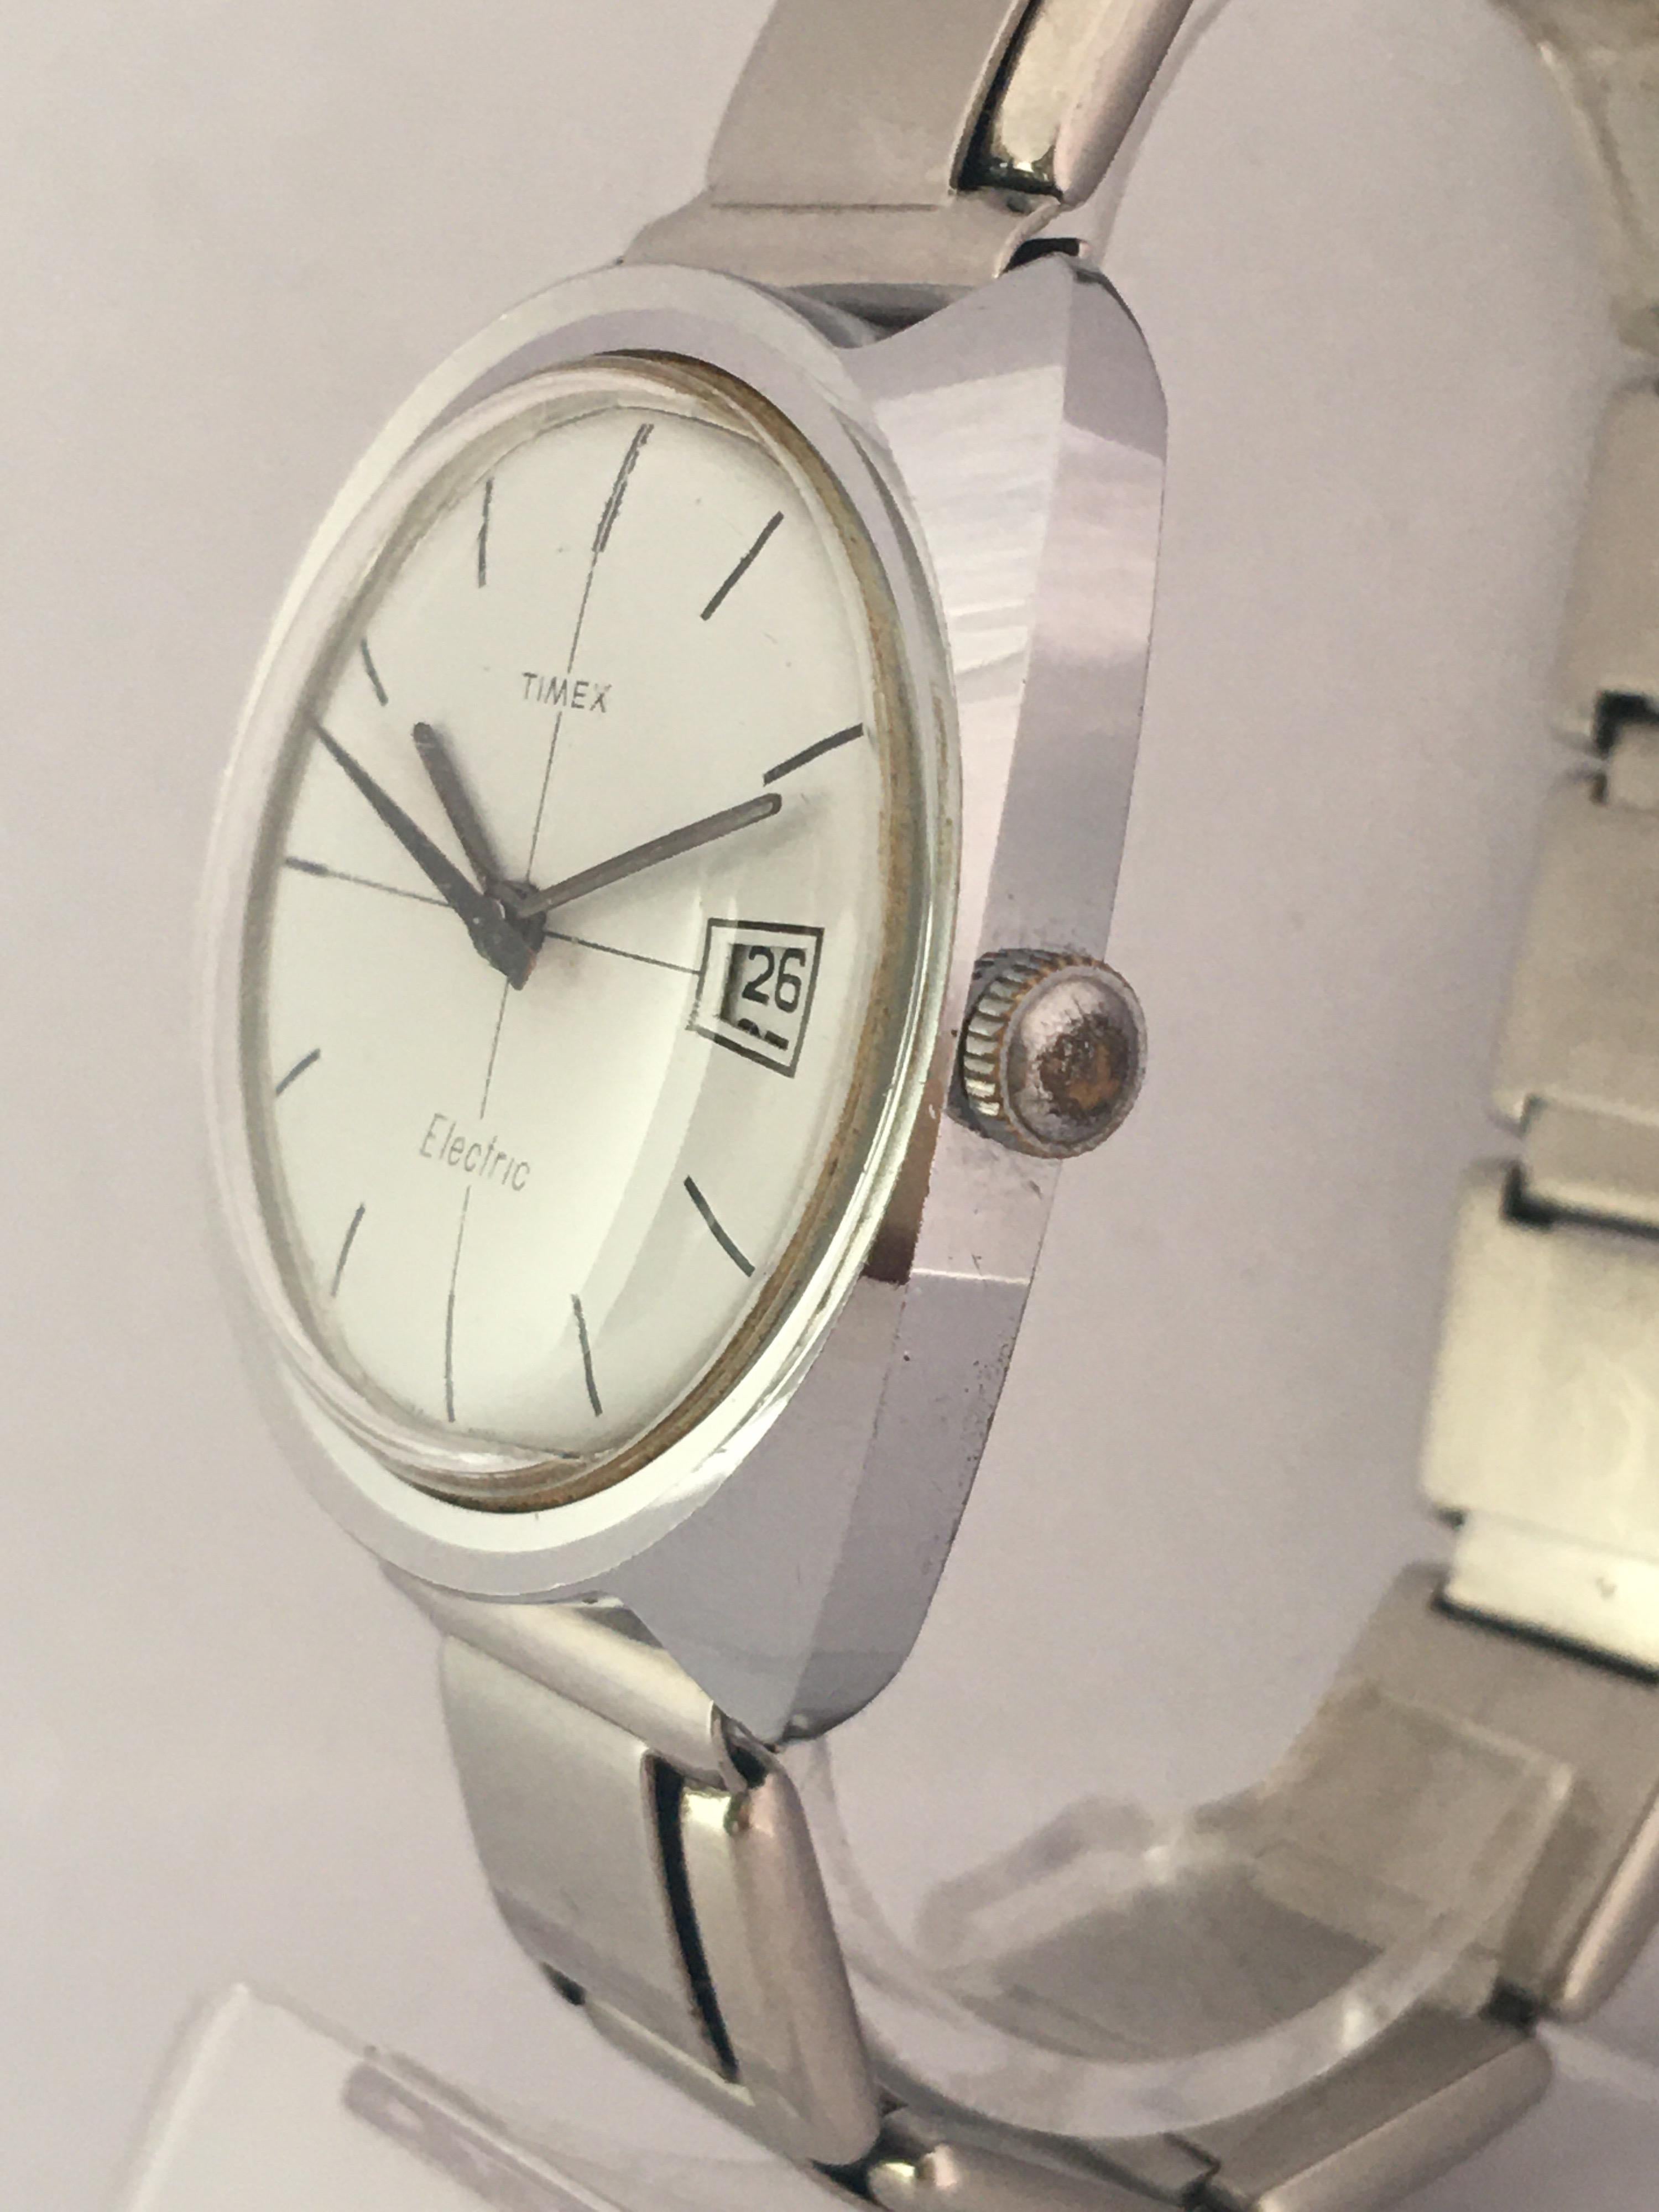 timex electric watch